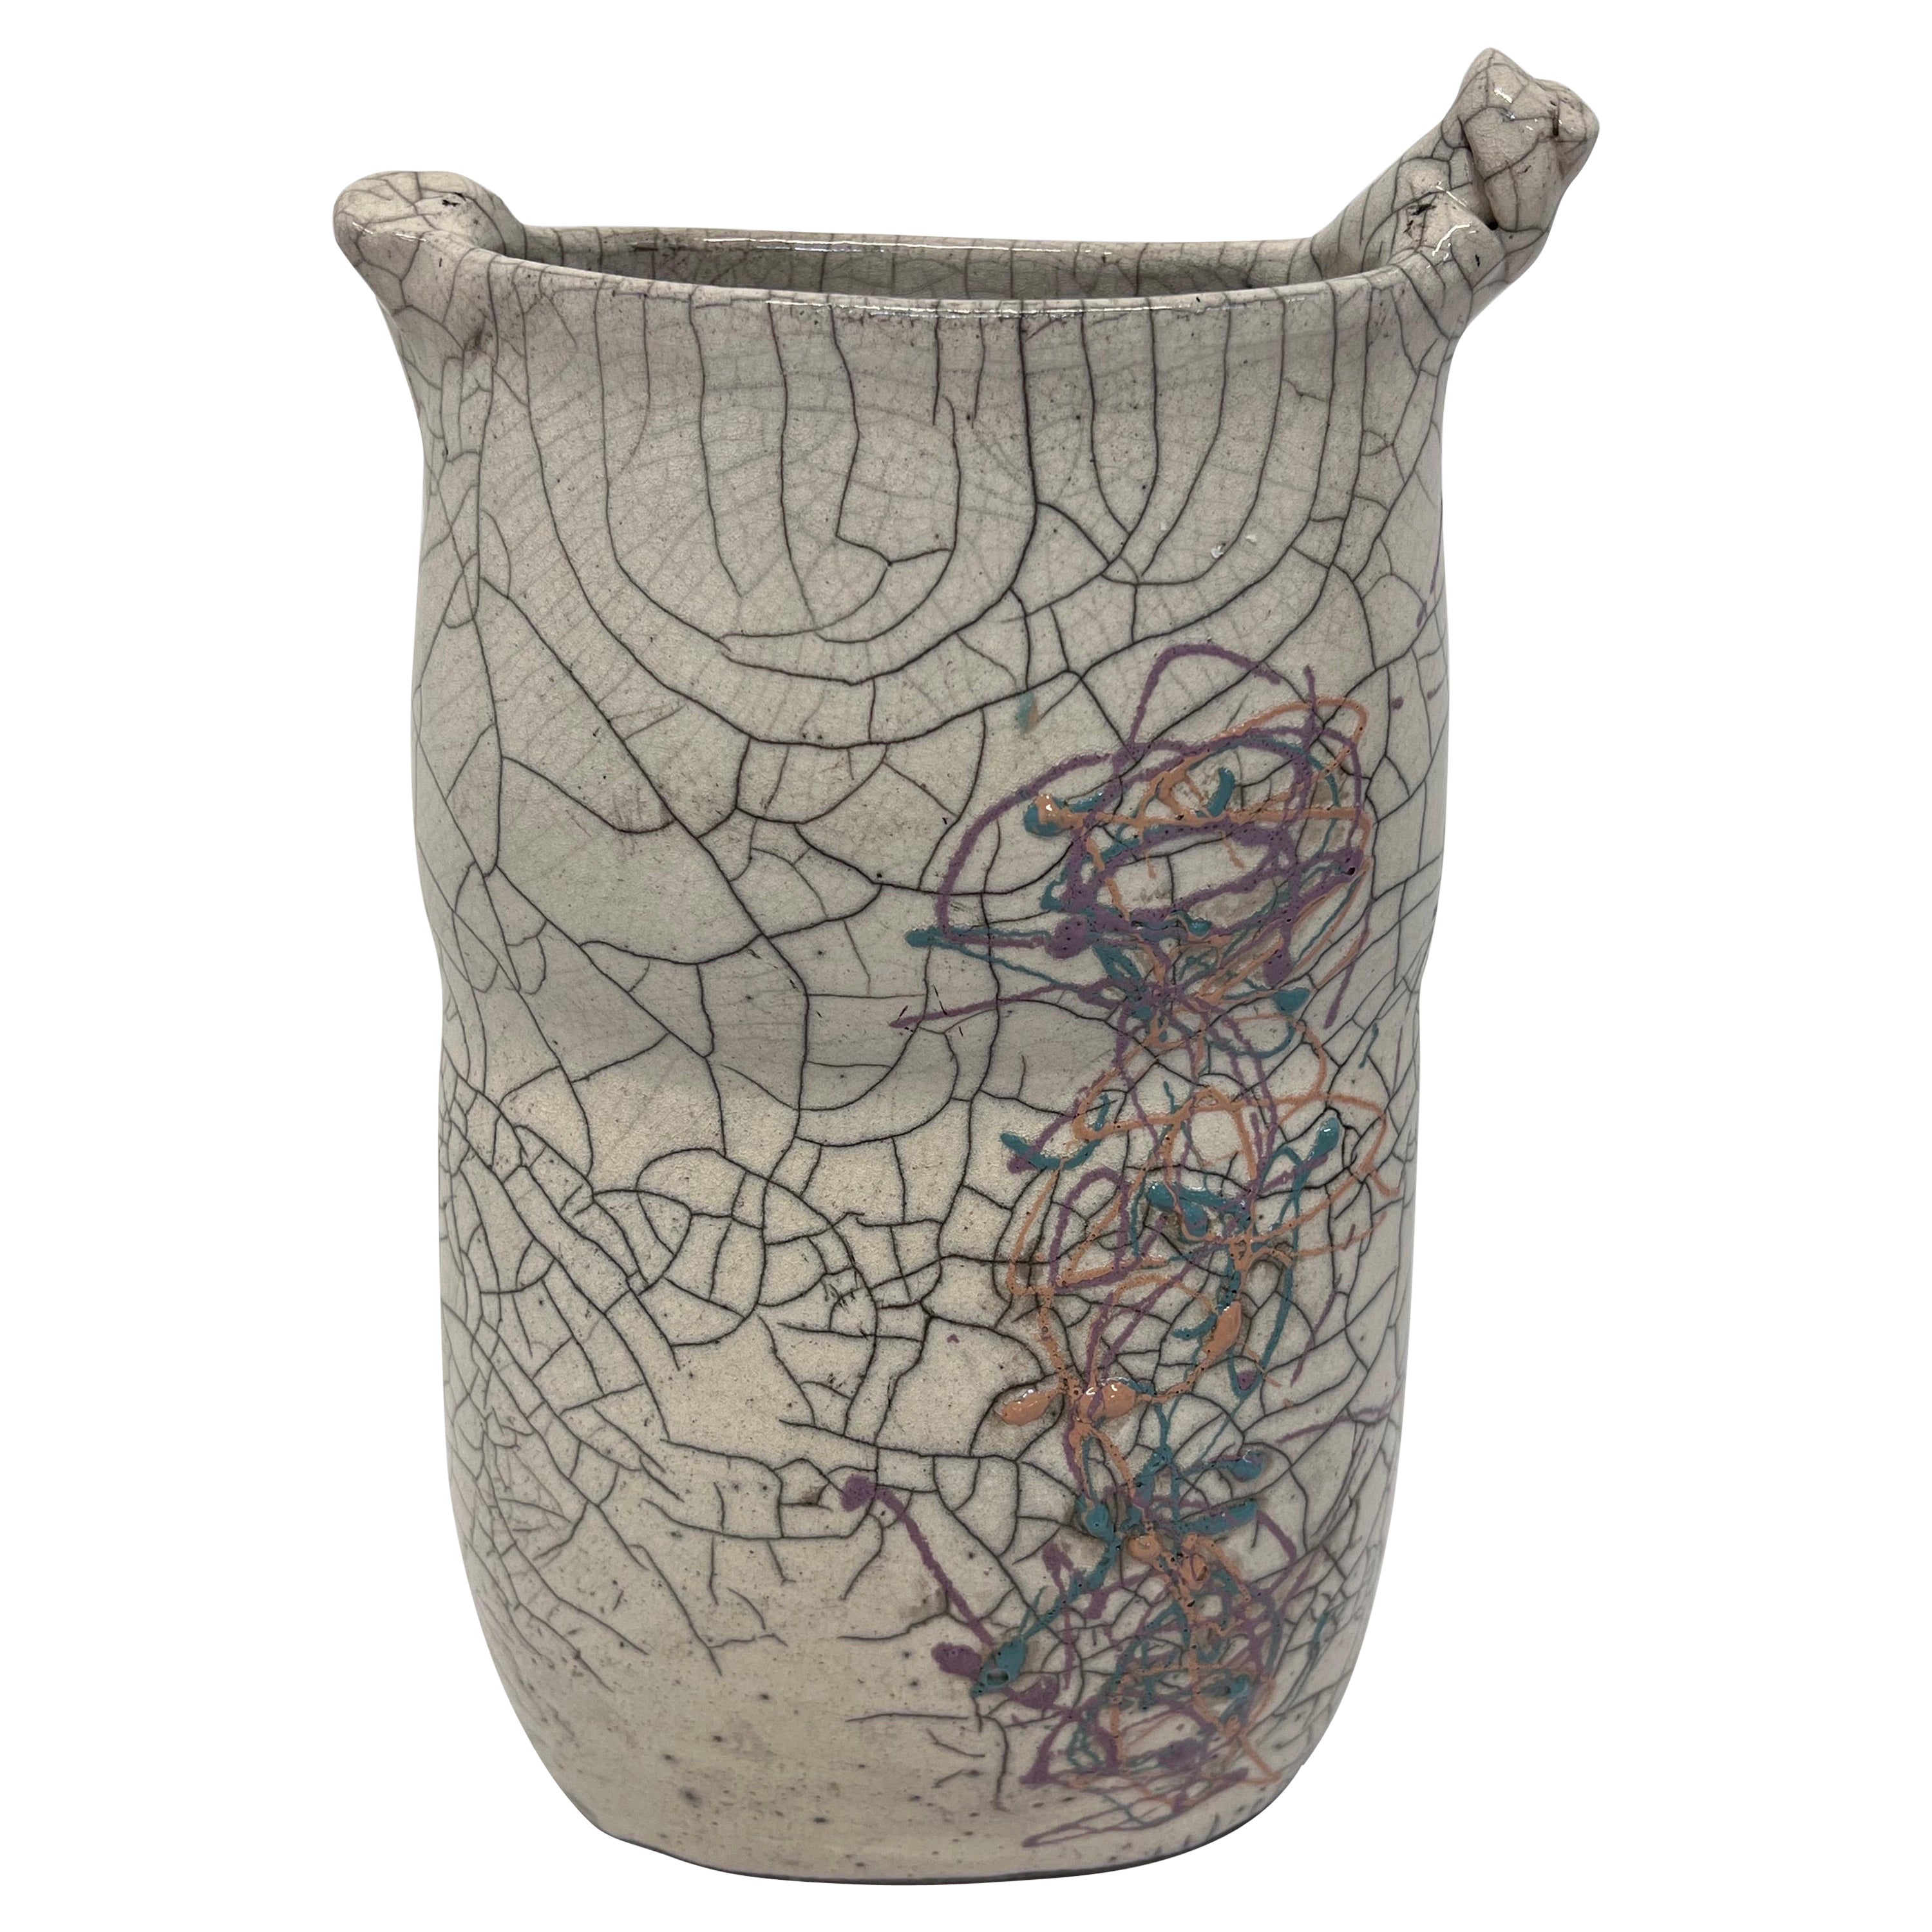 Postmodern Crackled Glaze Studio Pottery Vase with Colorful Design, 1980s